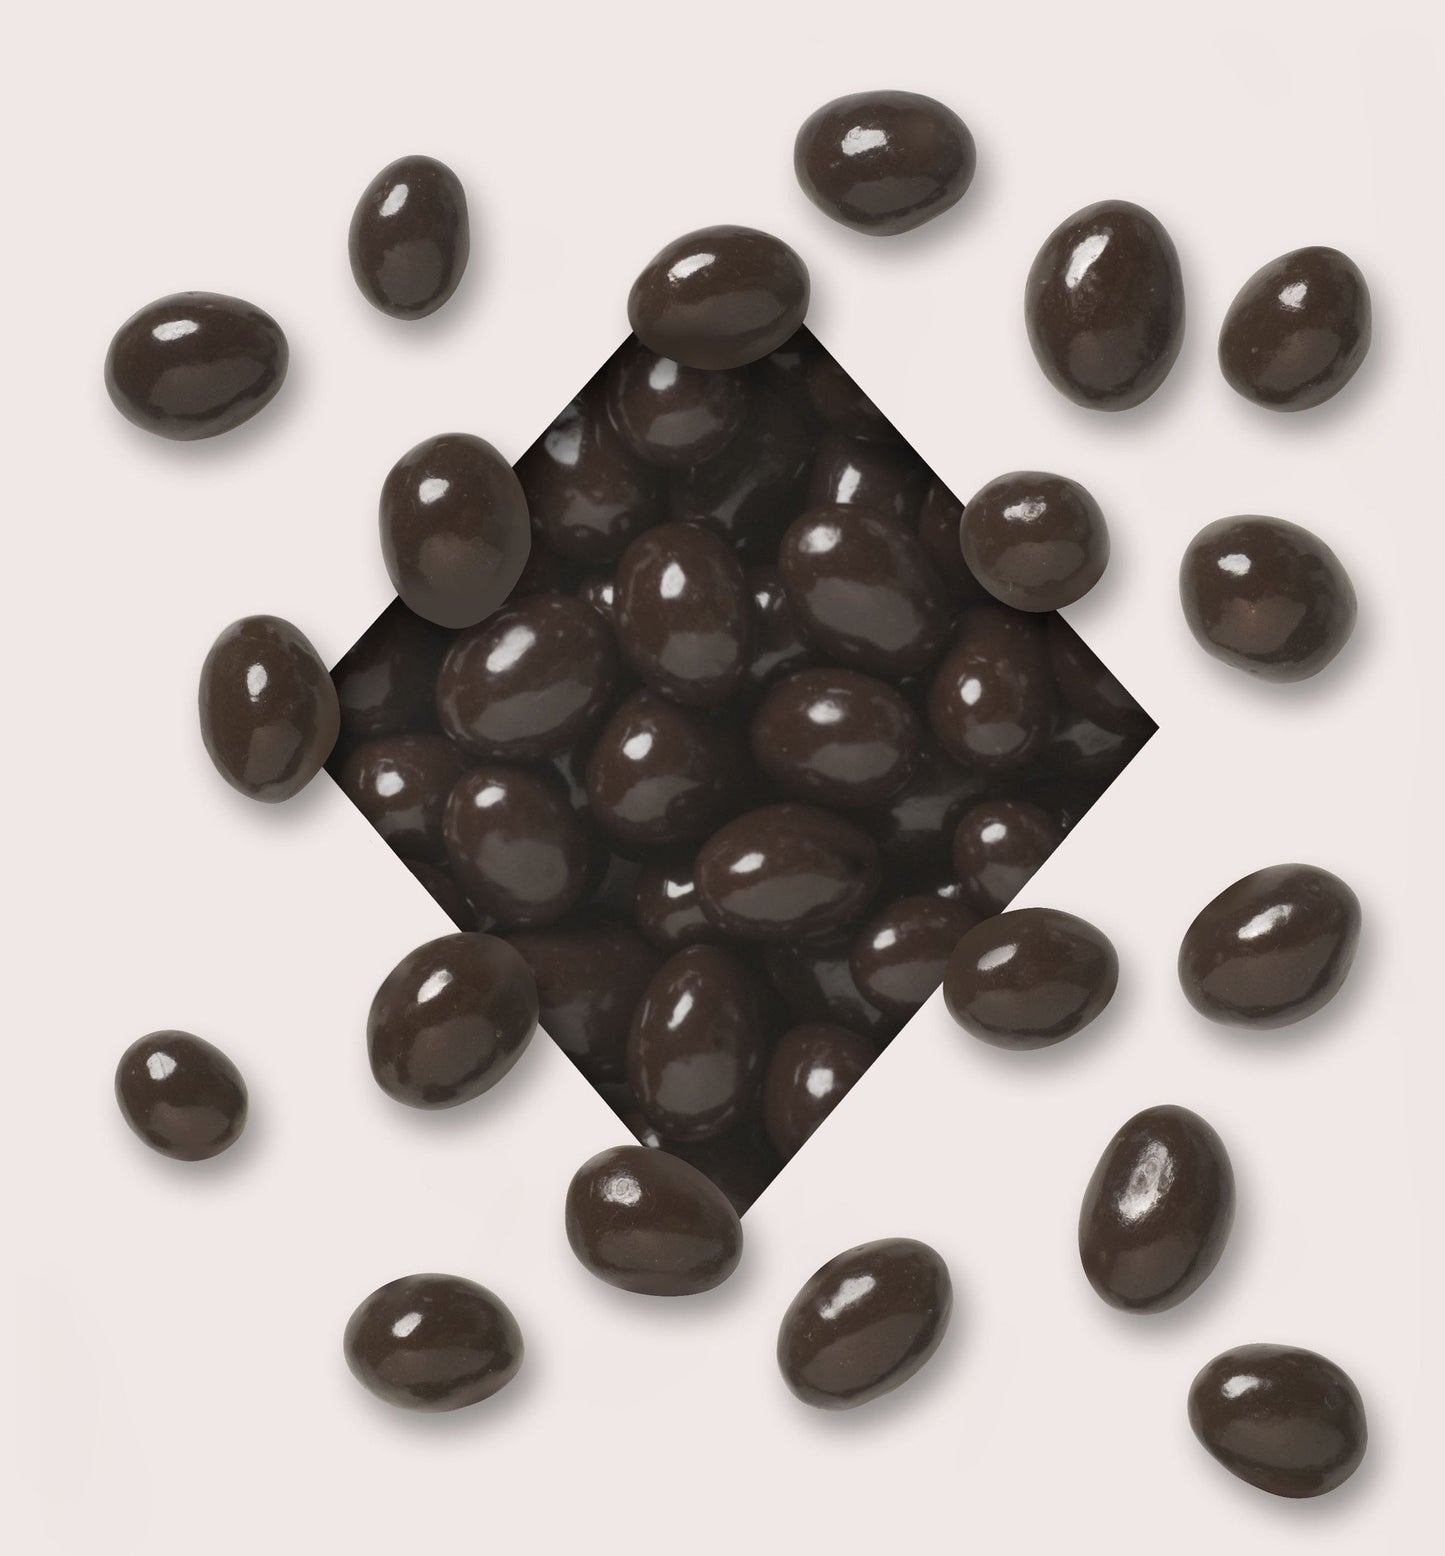 Dark Chocolate Covered Pistachios